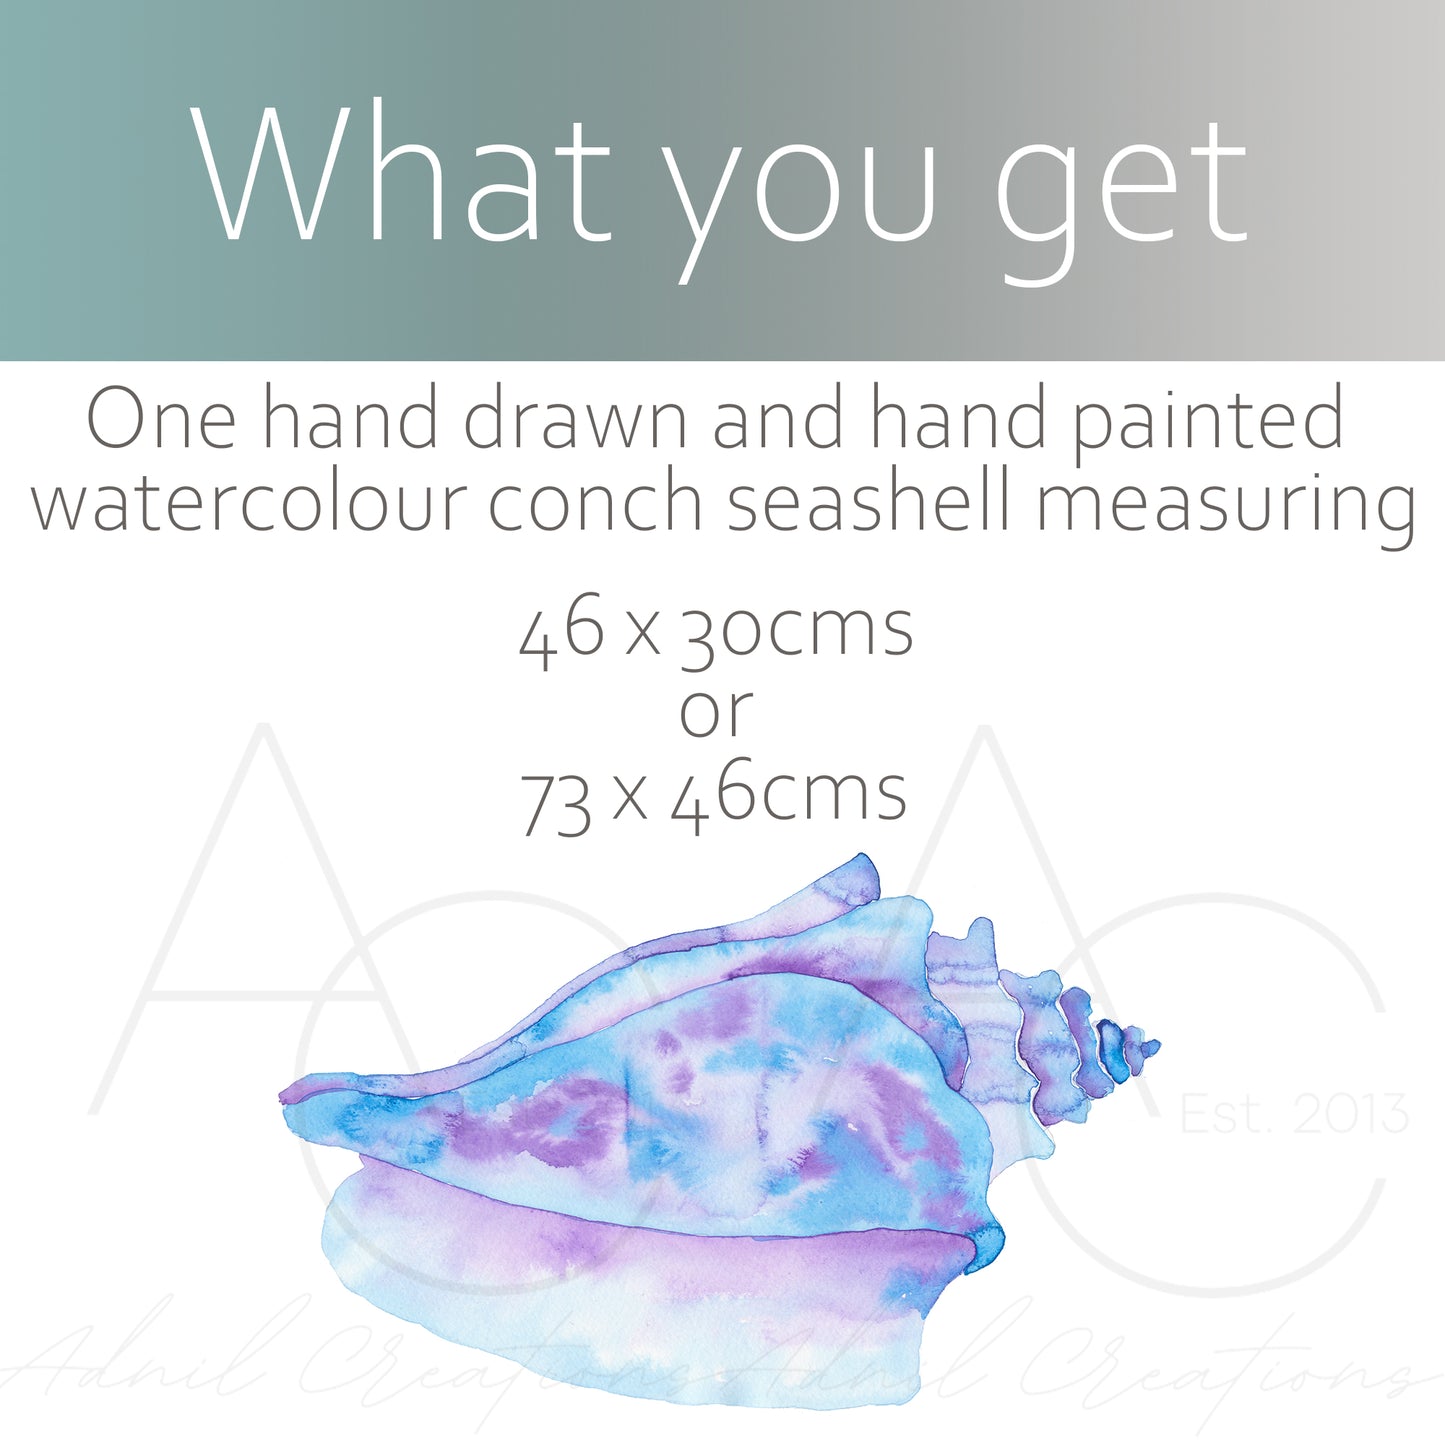 Watercolour conch seashell | Wall decal